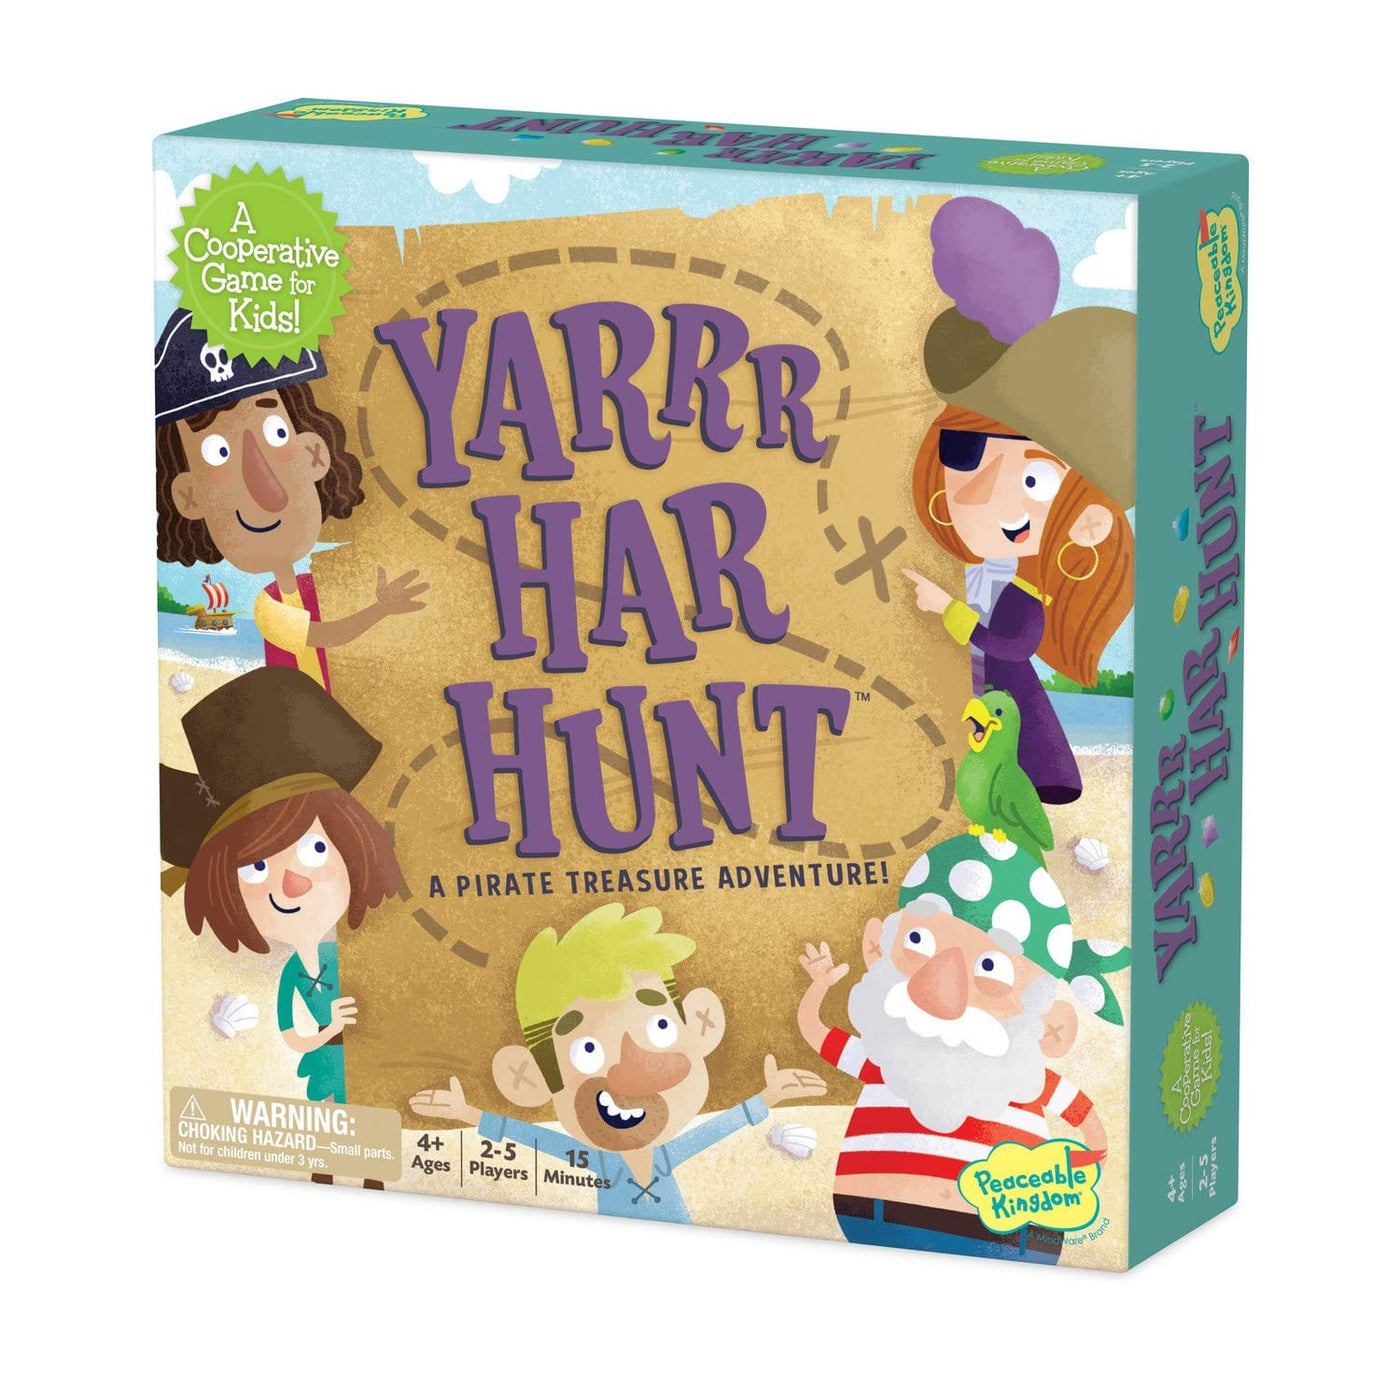 Yarrr Har Hunt by Peaceable Kingdom, USA Game